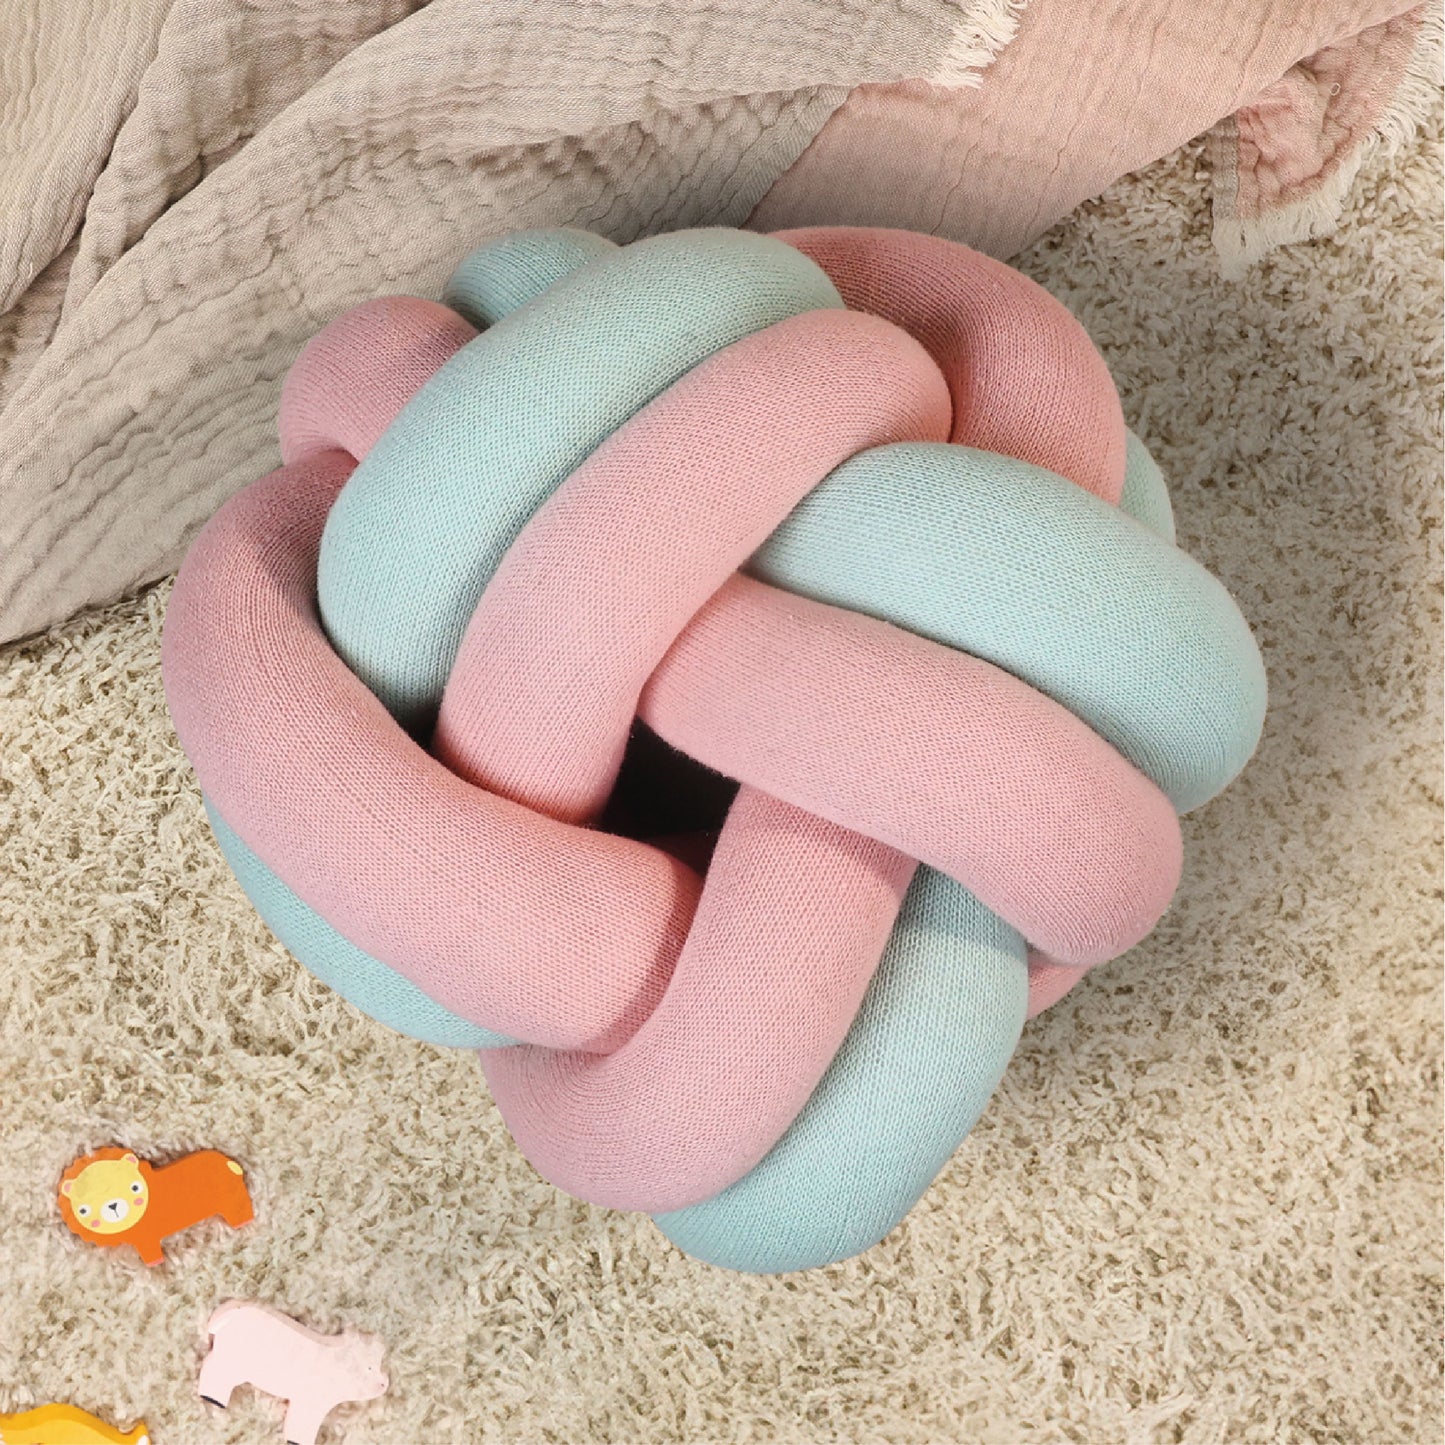 Ball shaped cushion or pillow